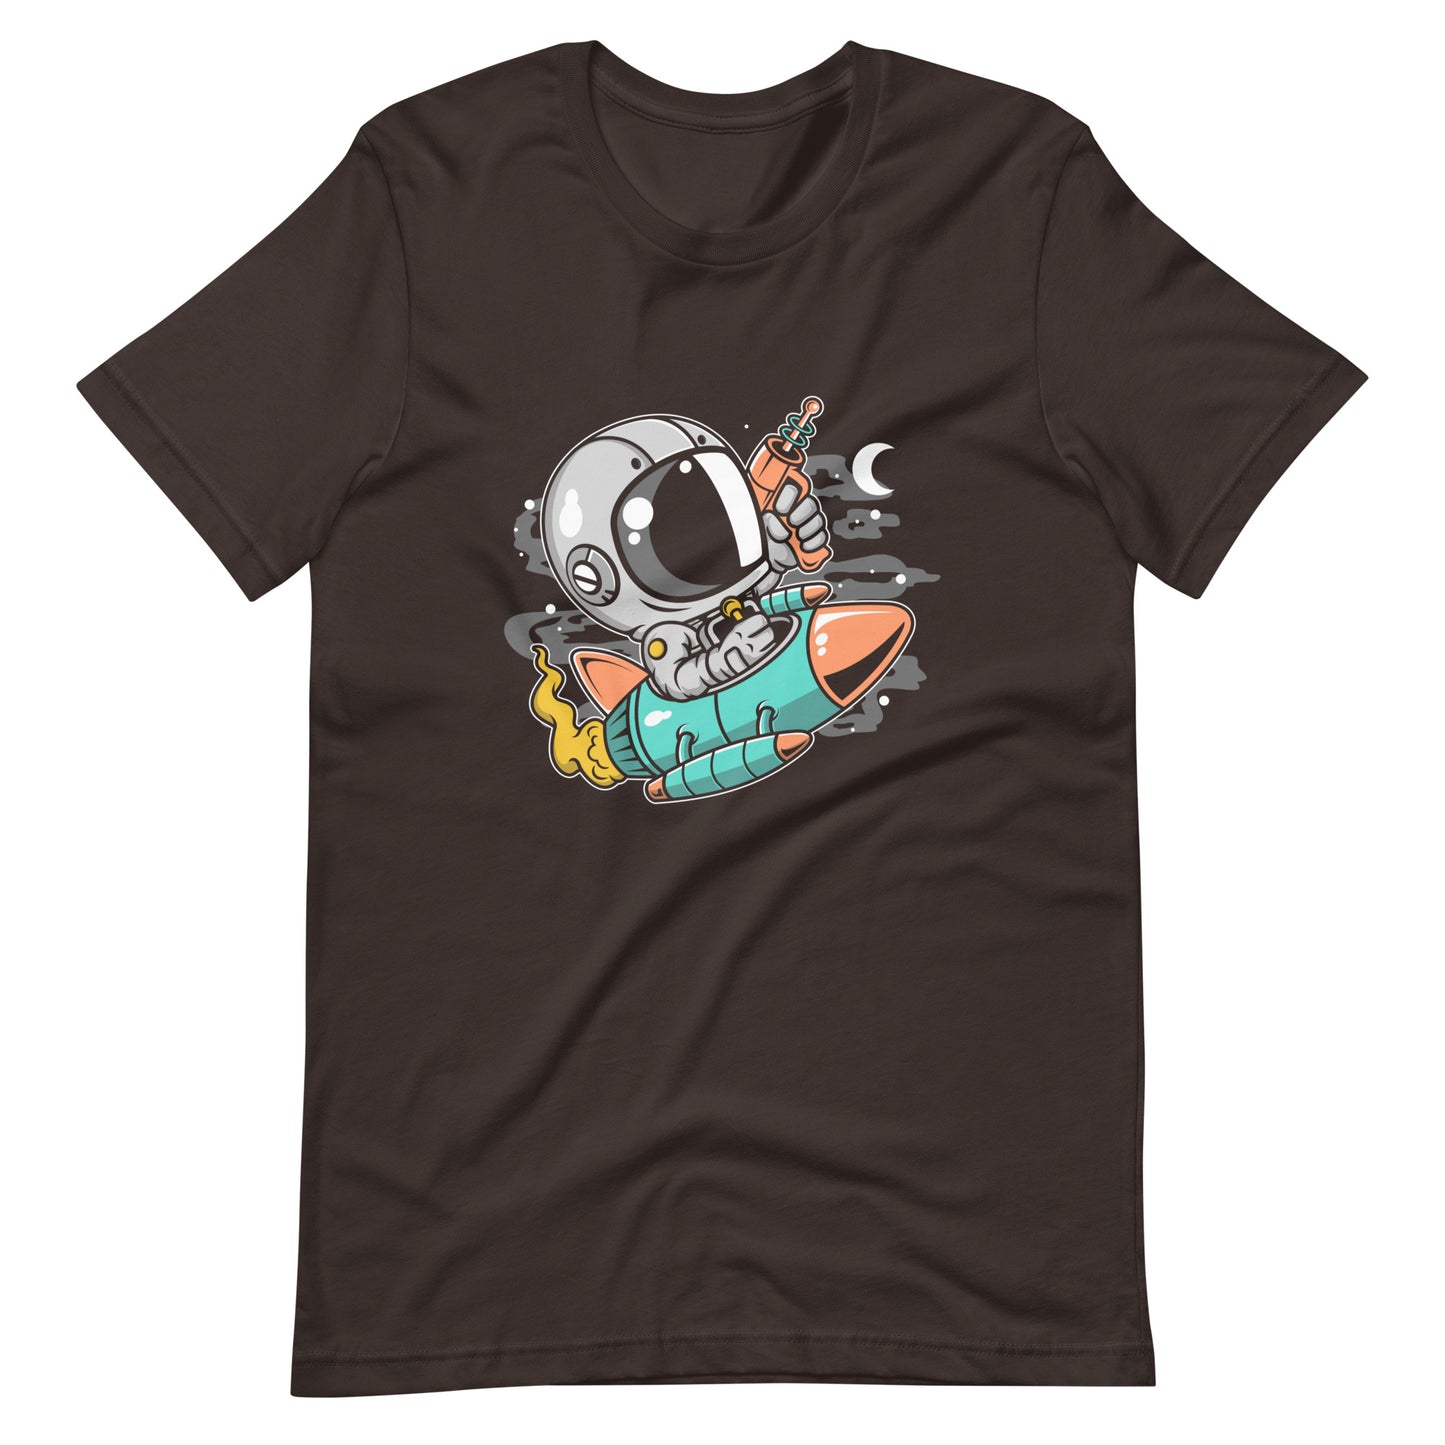 Astronaut Riding Rocket - Men's t-shirt - Brown Front